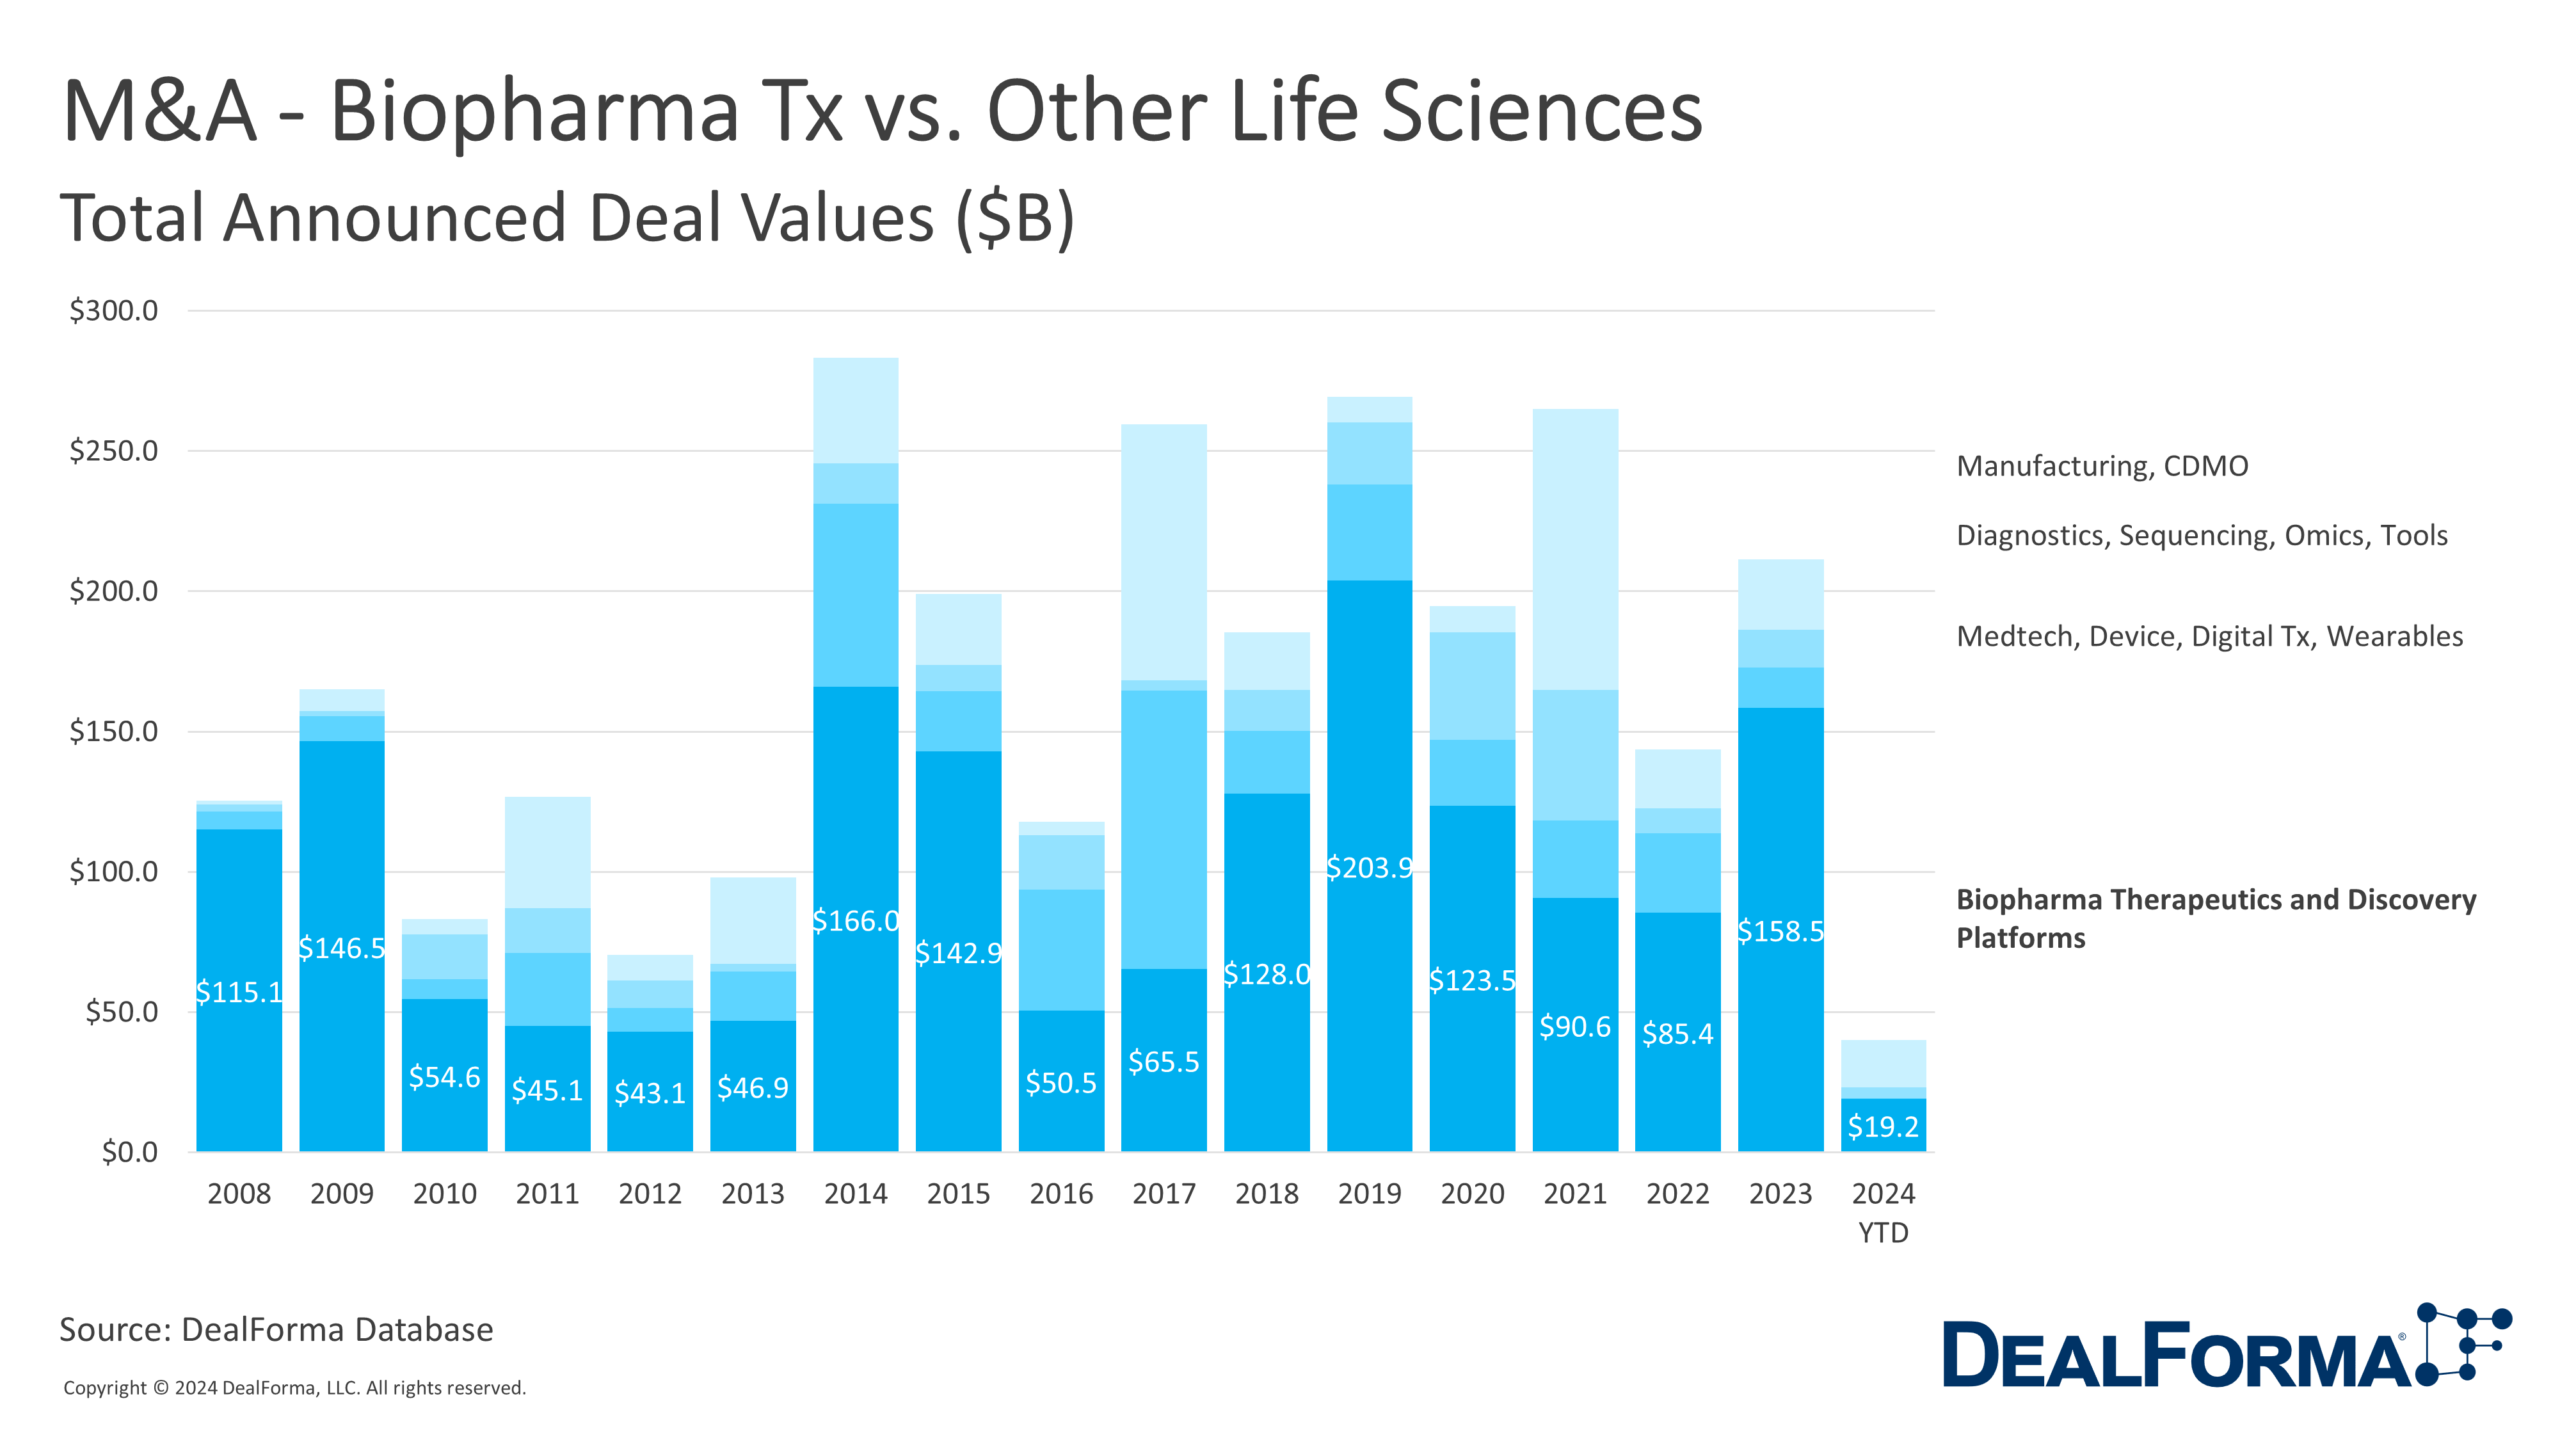 M&A - Biopharma Tx vs. Other Life Sciences